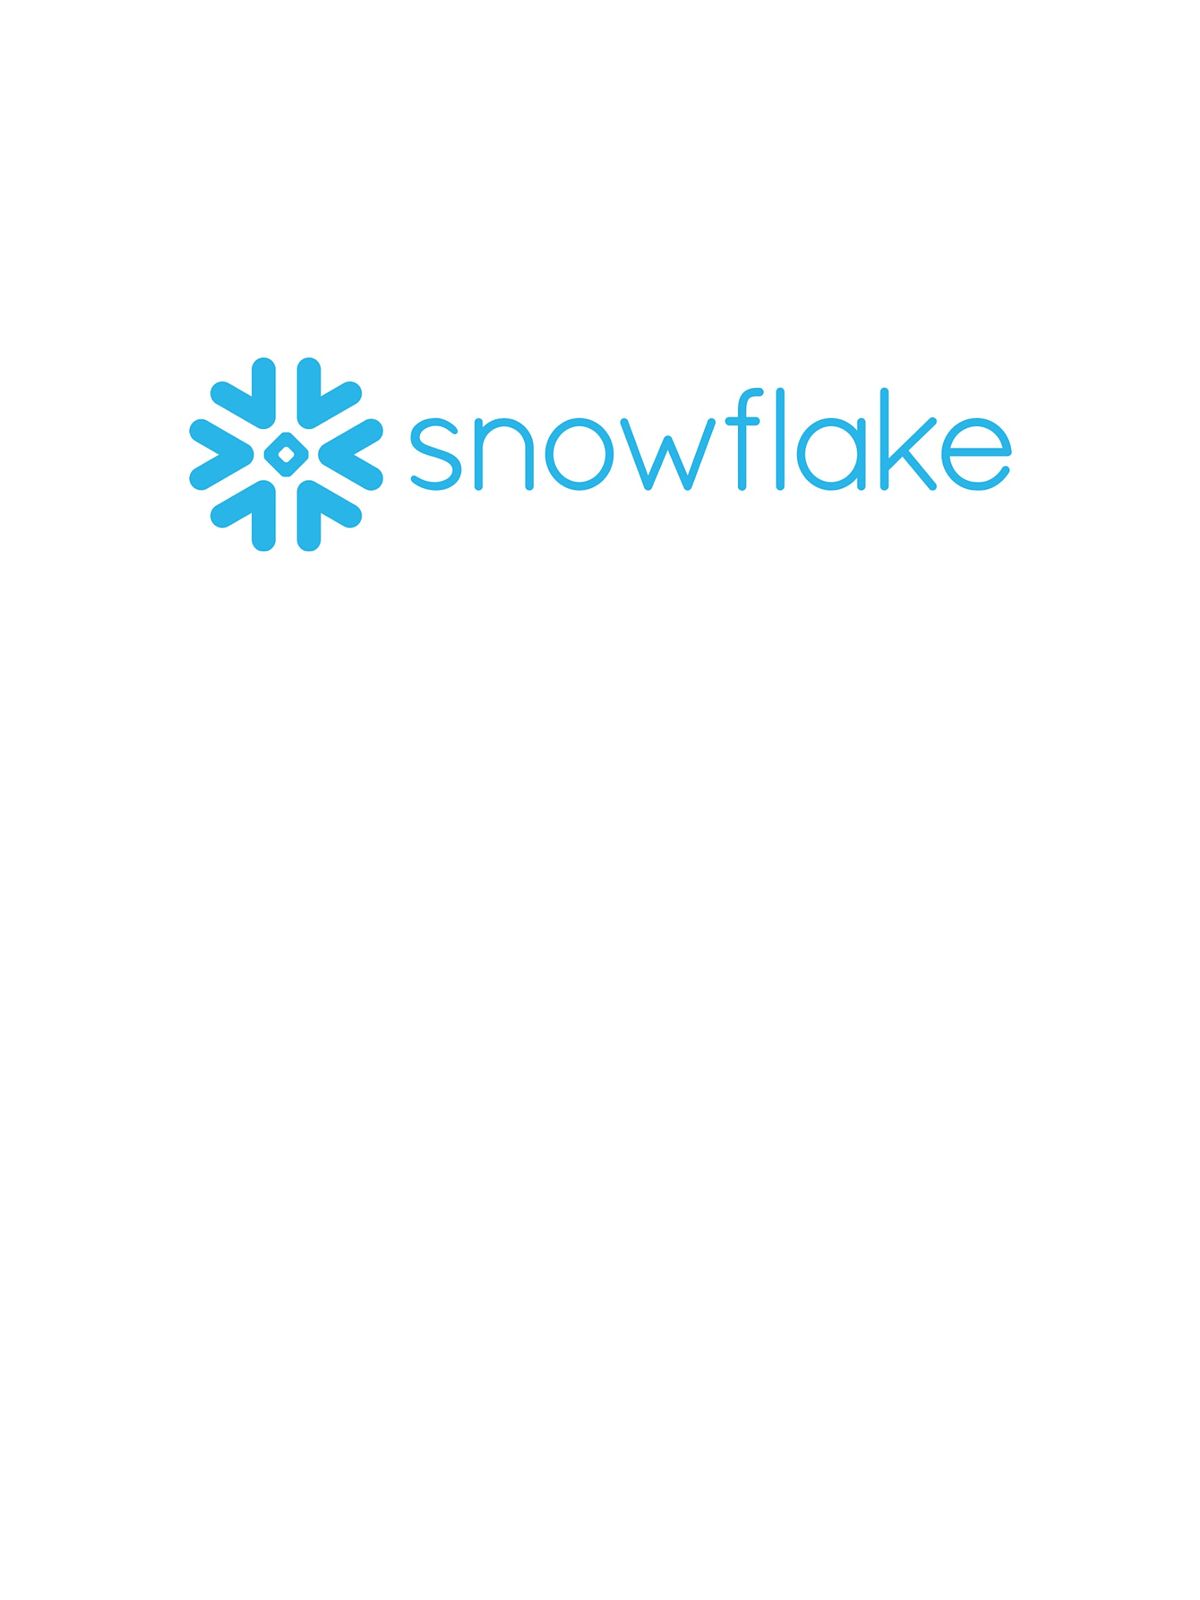 4 Weeks Snowflake cloud data platform Training Course Fairfax